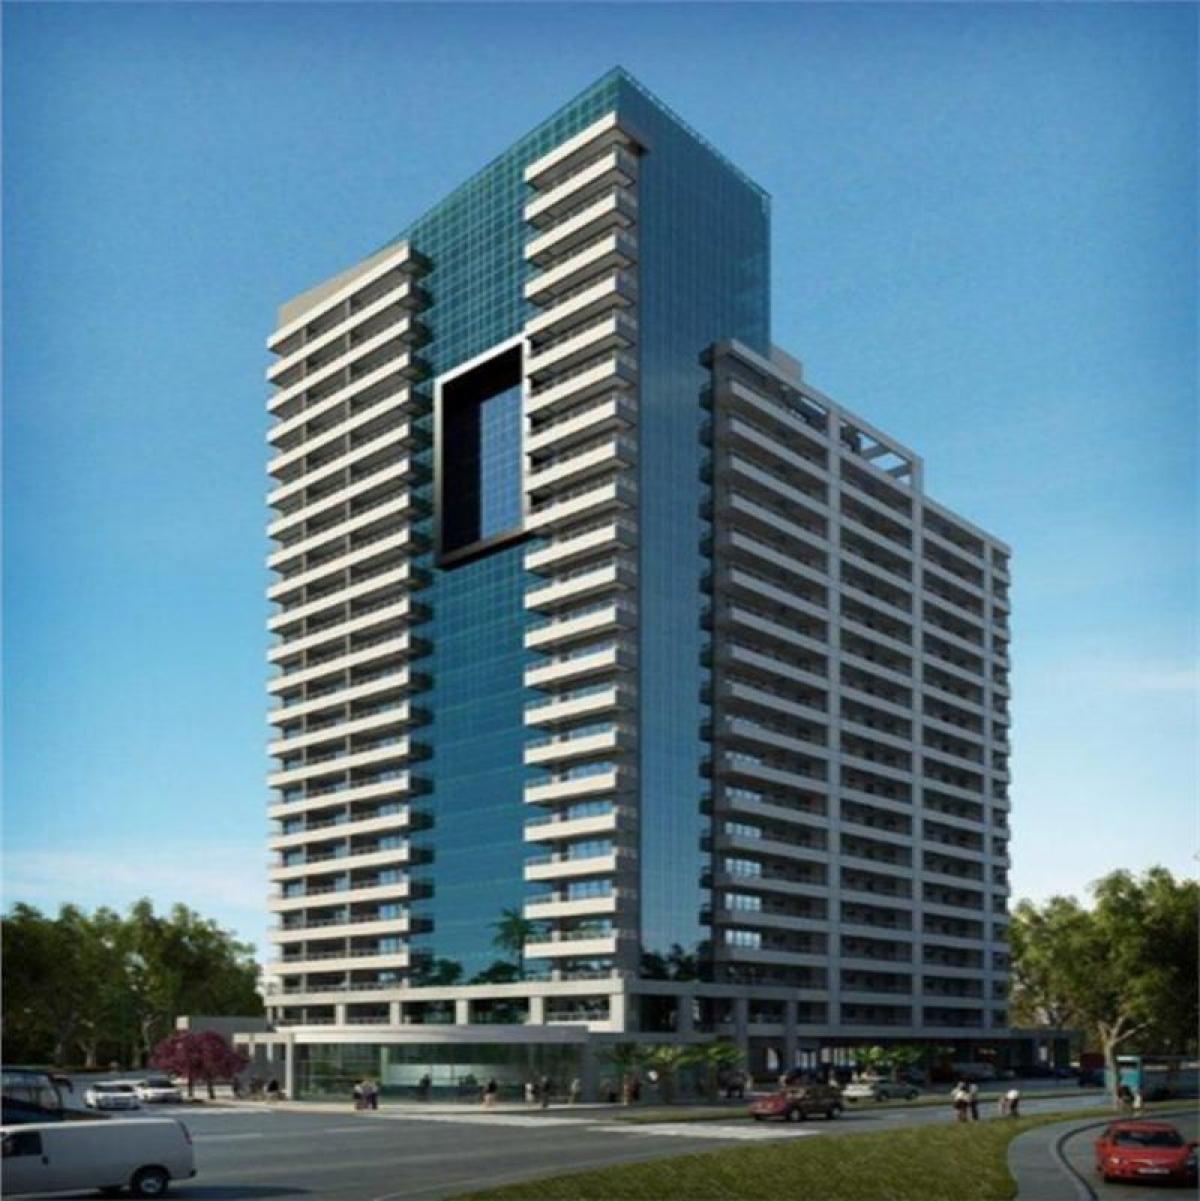 Picture of Commercial Building For Sale in Sao Bernardo Do Campo, Sao Paulo, Brazil